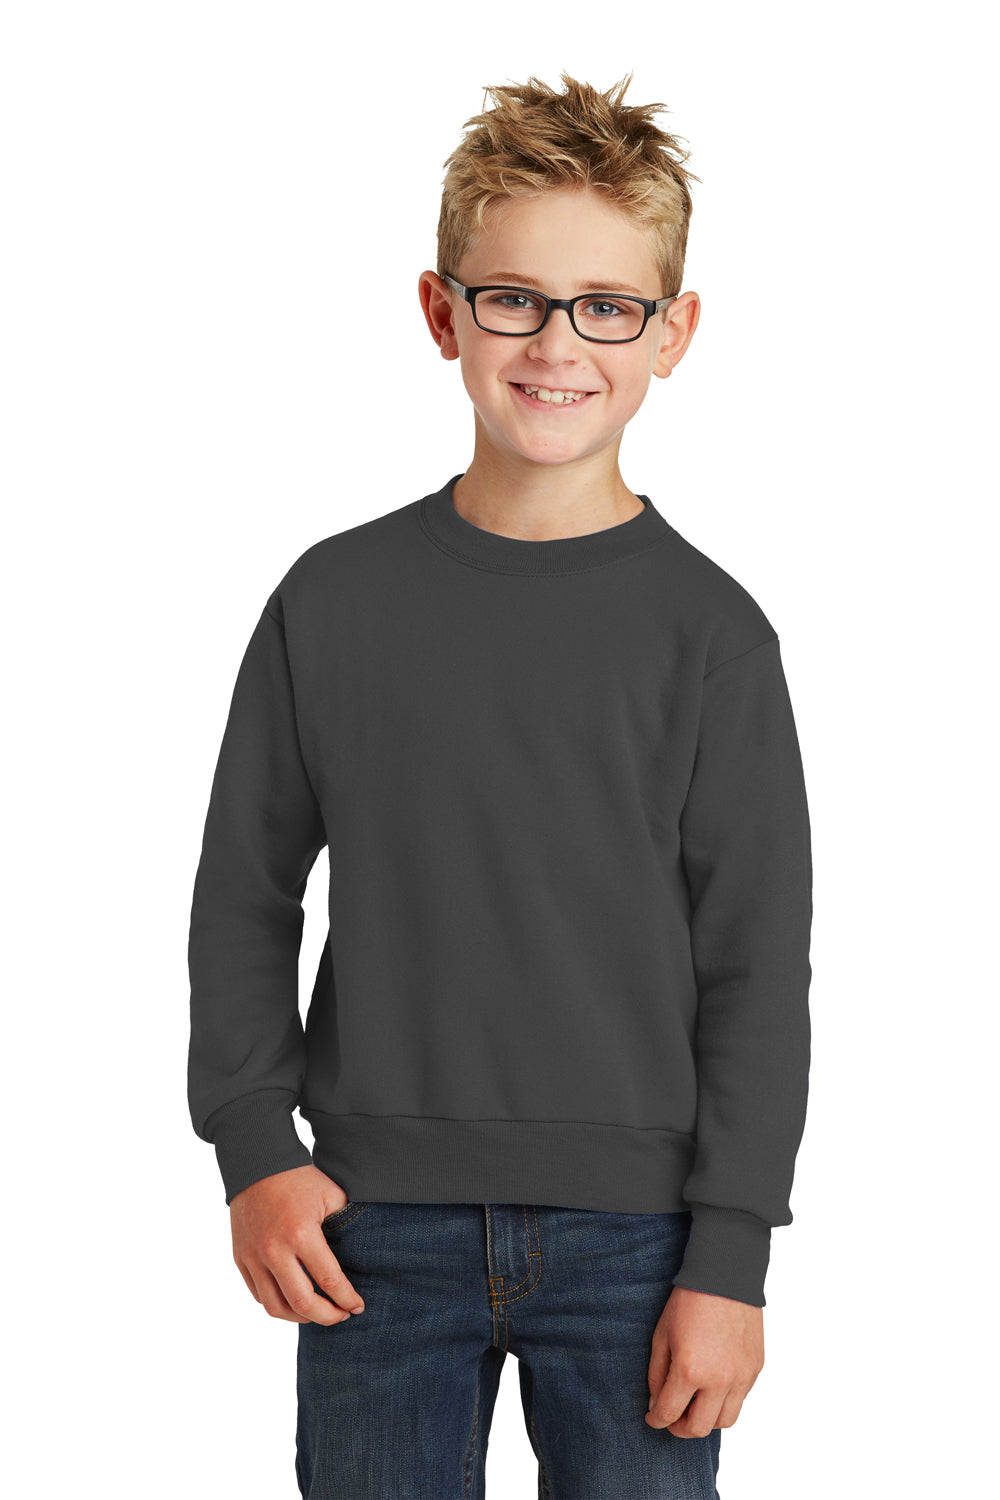 Port & Company PC90Y Youth Core Fleece Crewneck Sweatshirt Charcoal Grey Front